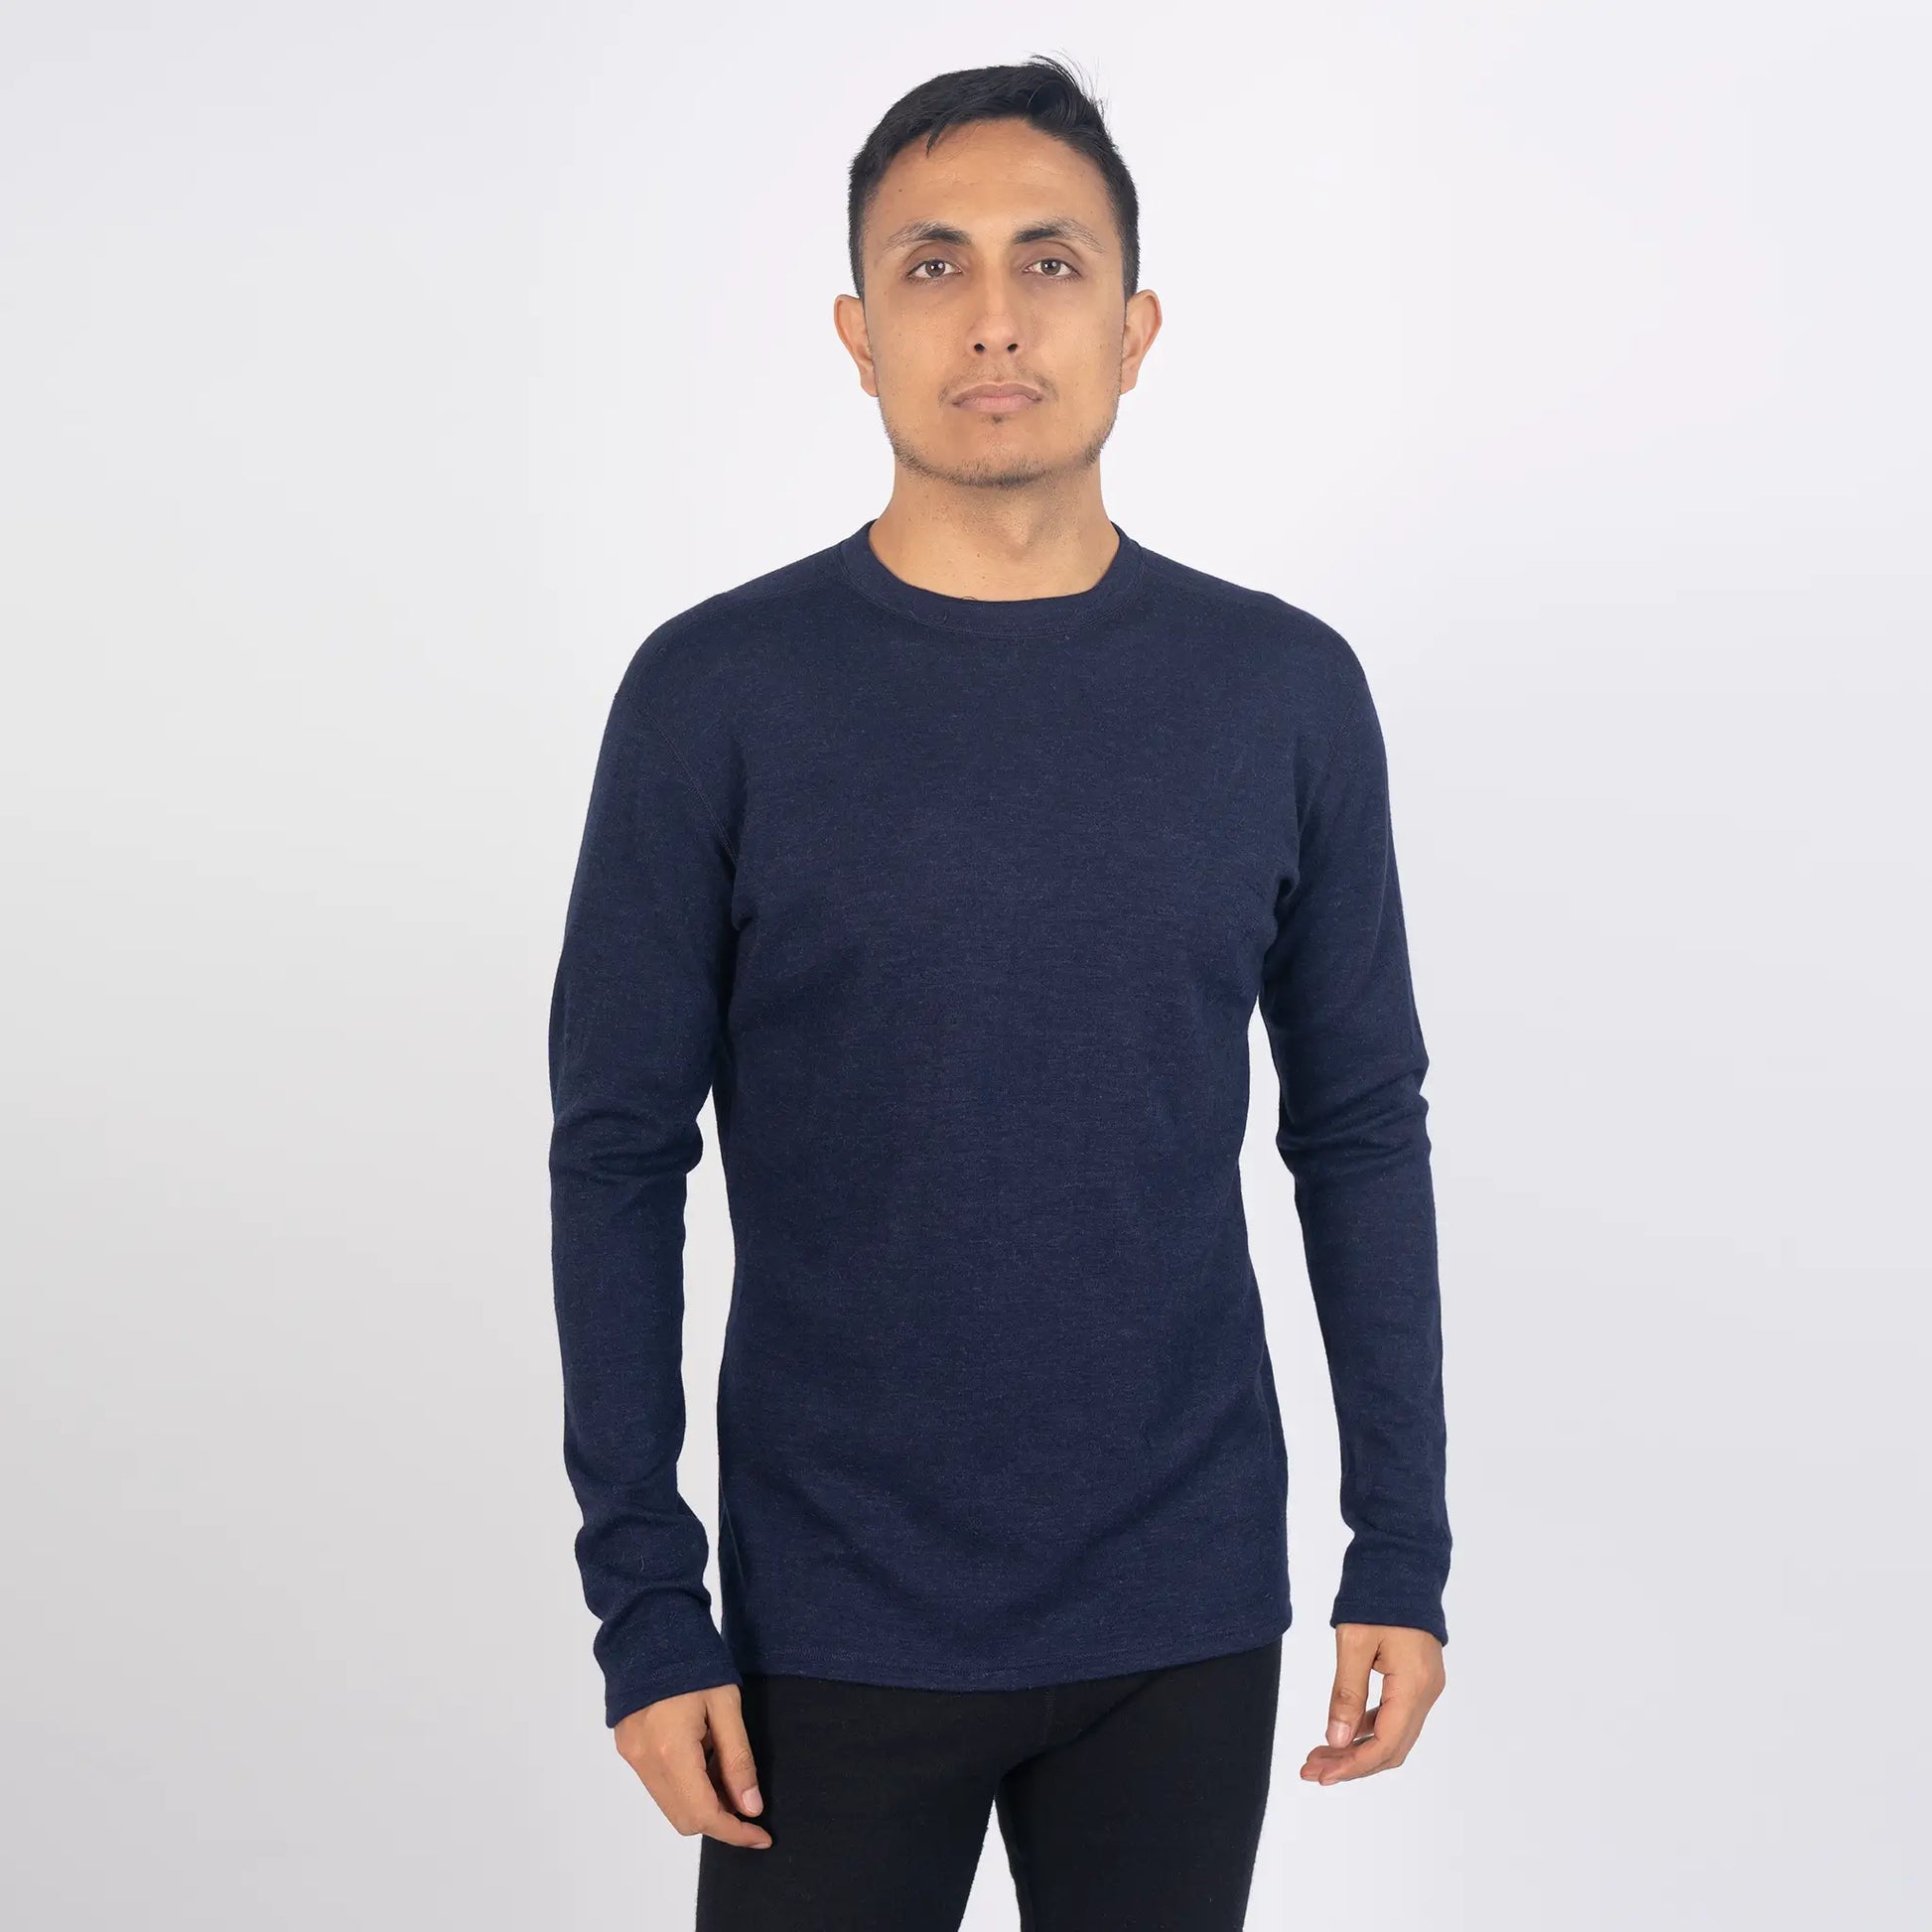 mens alpaca sweater best fleece lightweight color navy blue